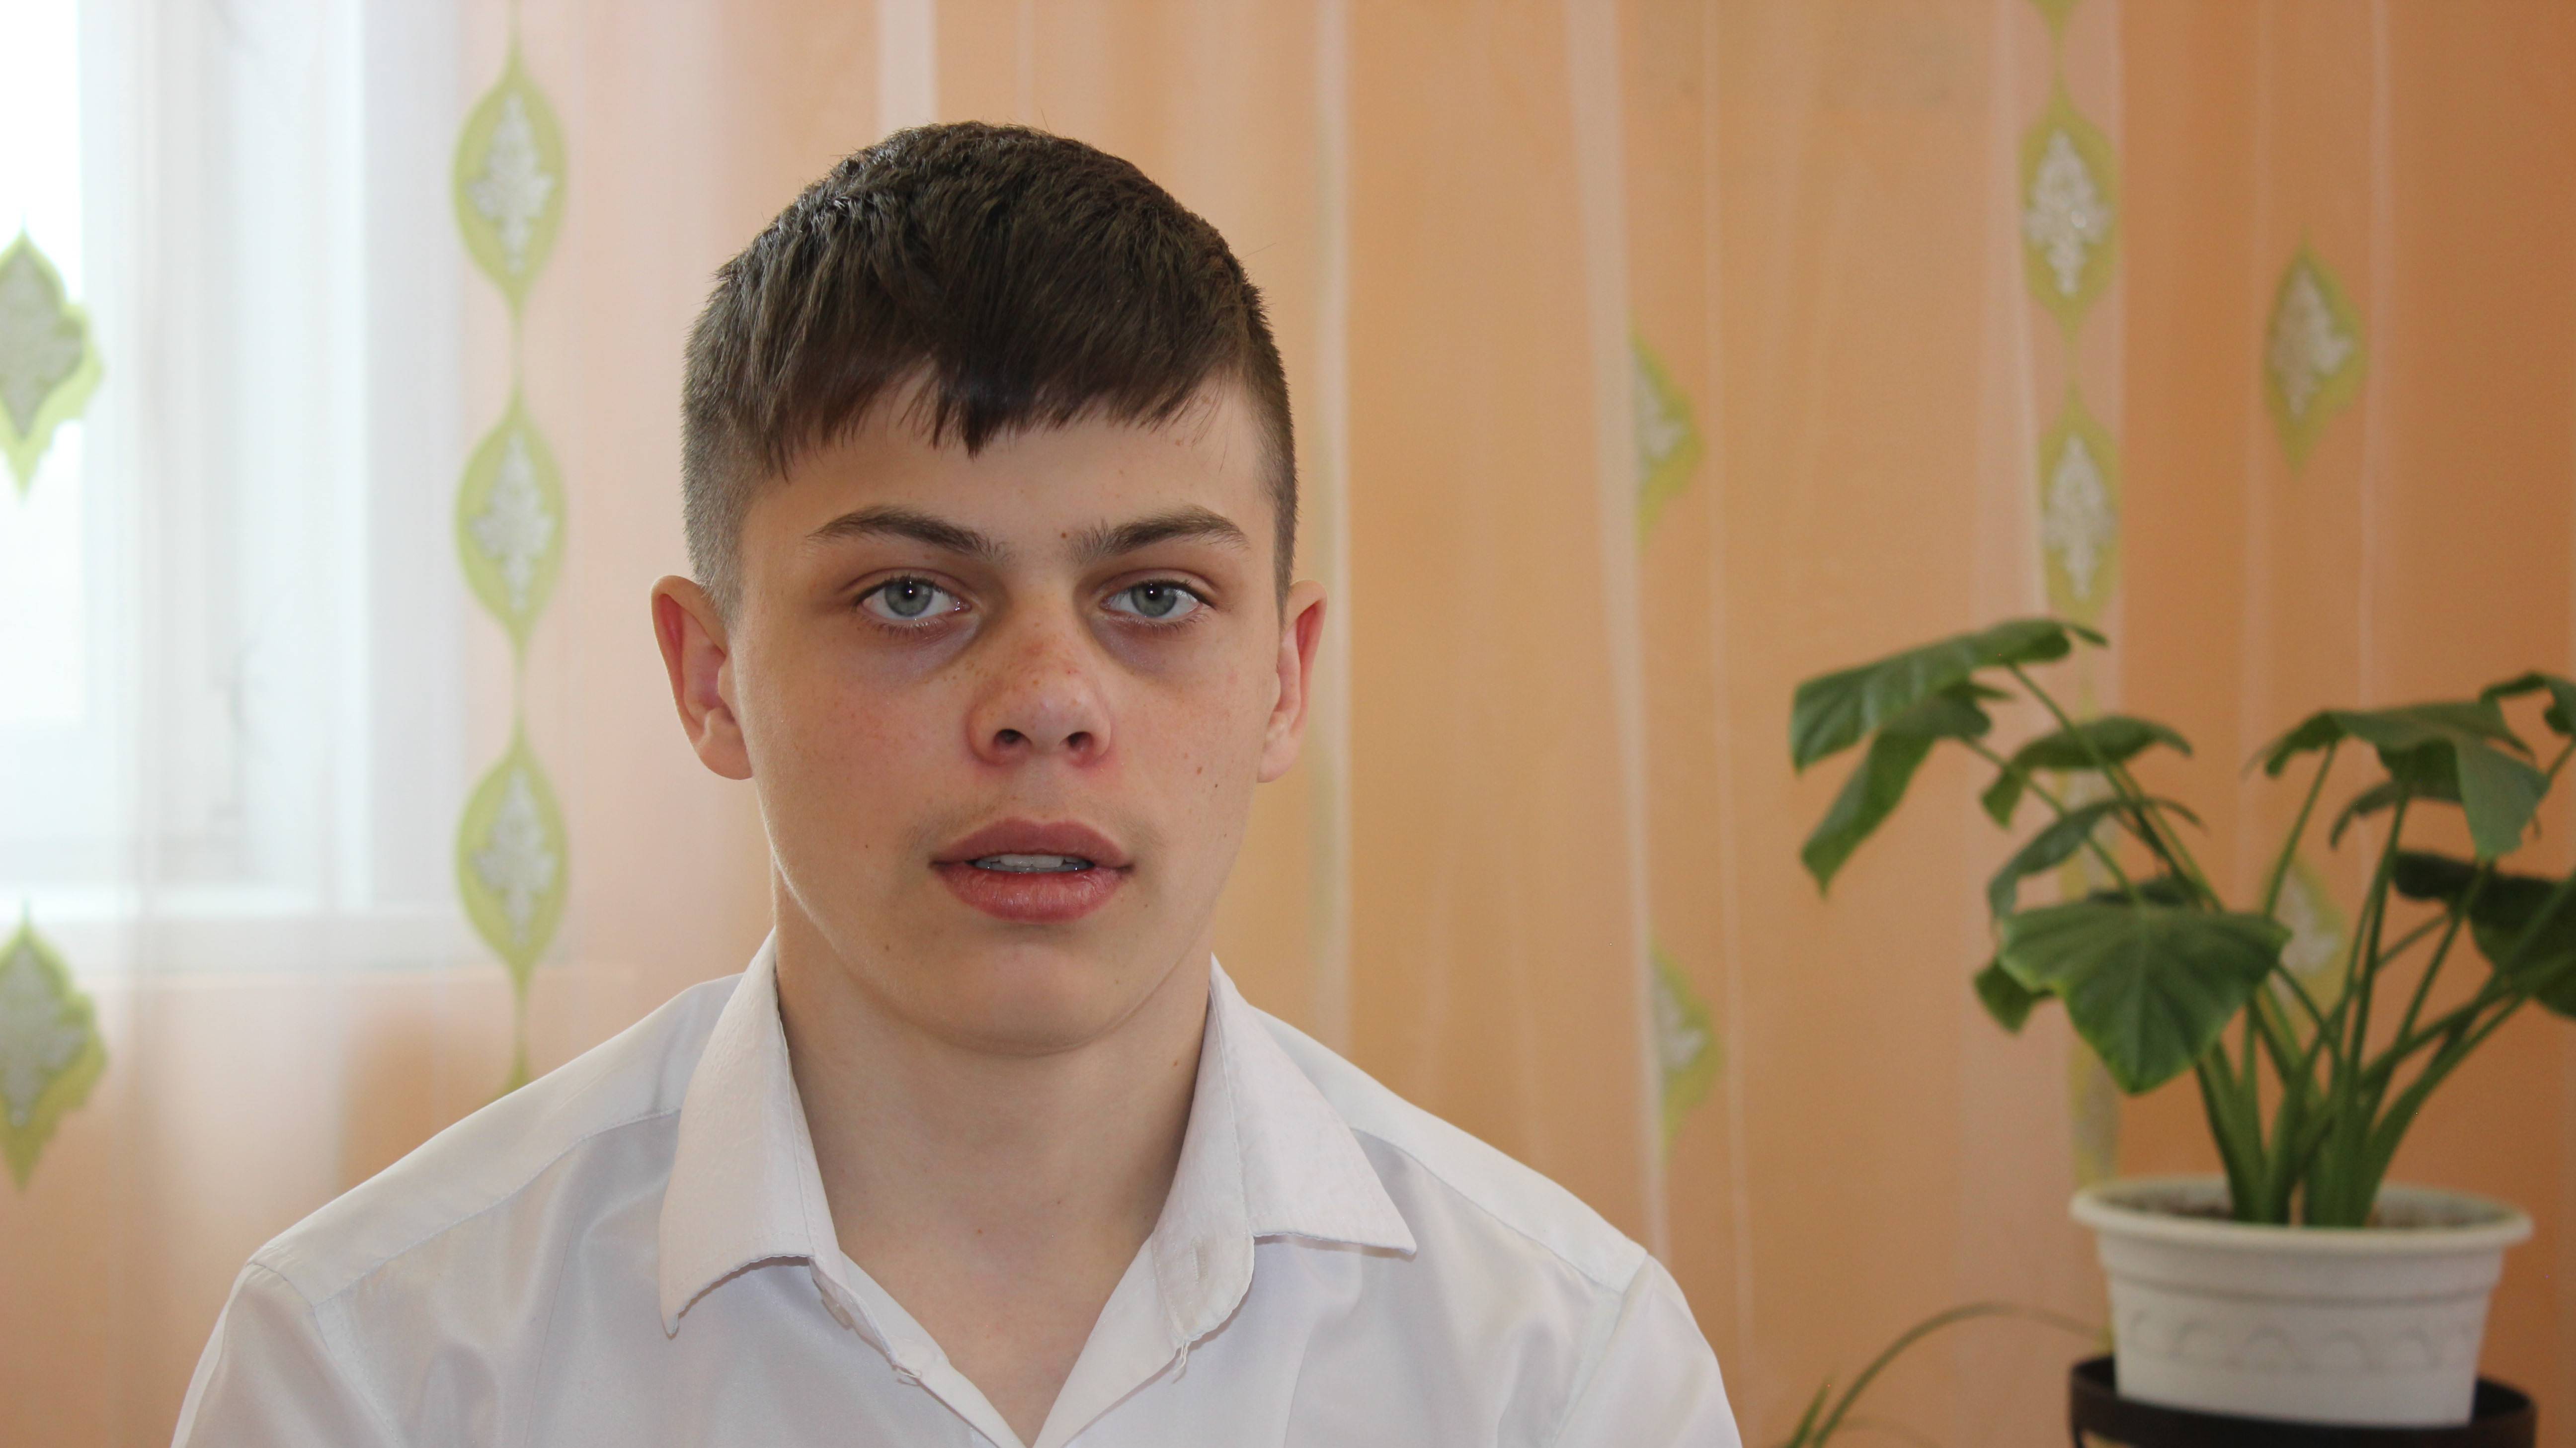 Данил, 15 лет (видео-анкета)